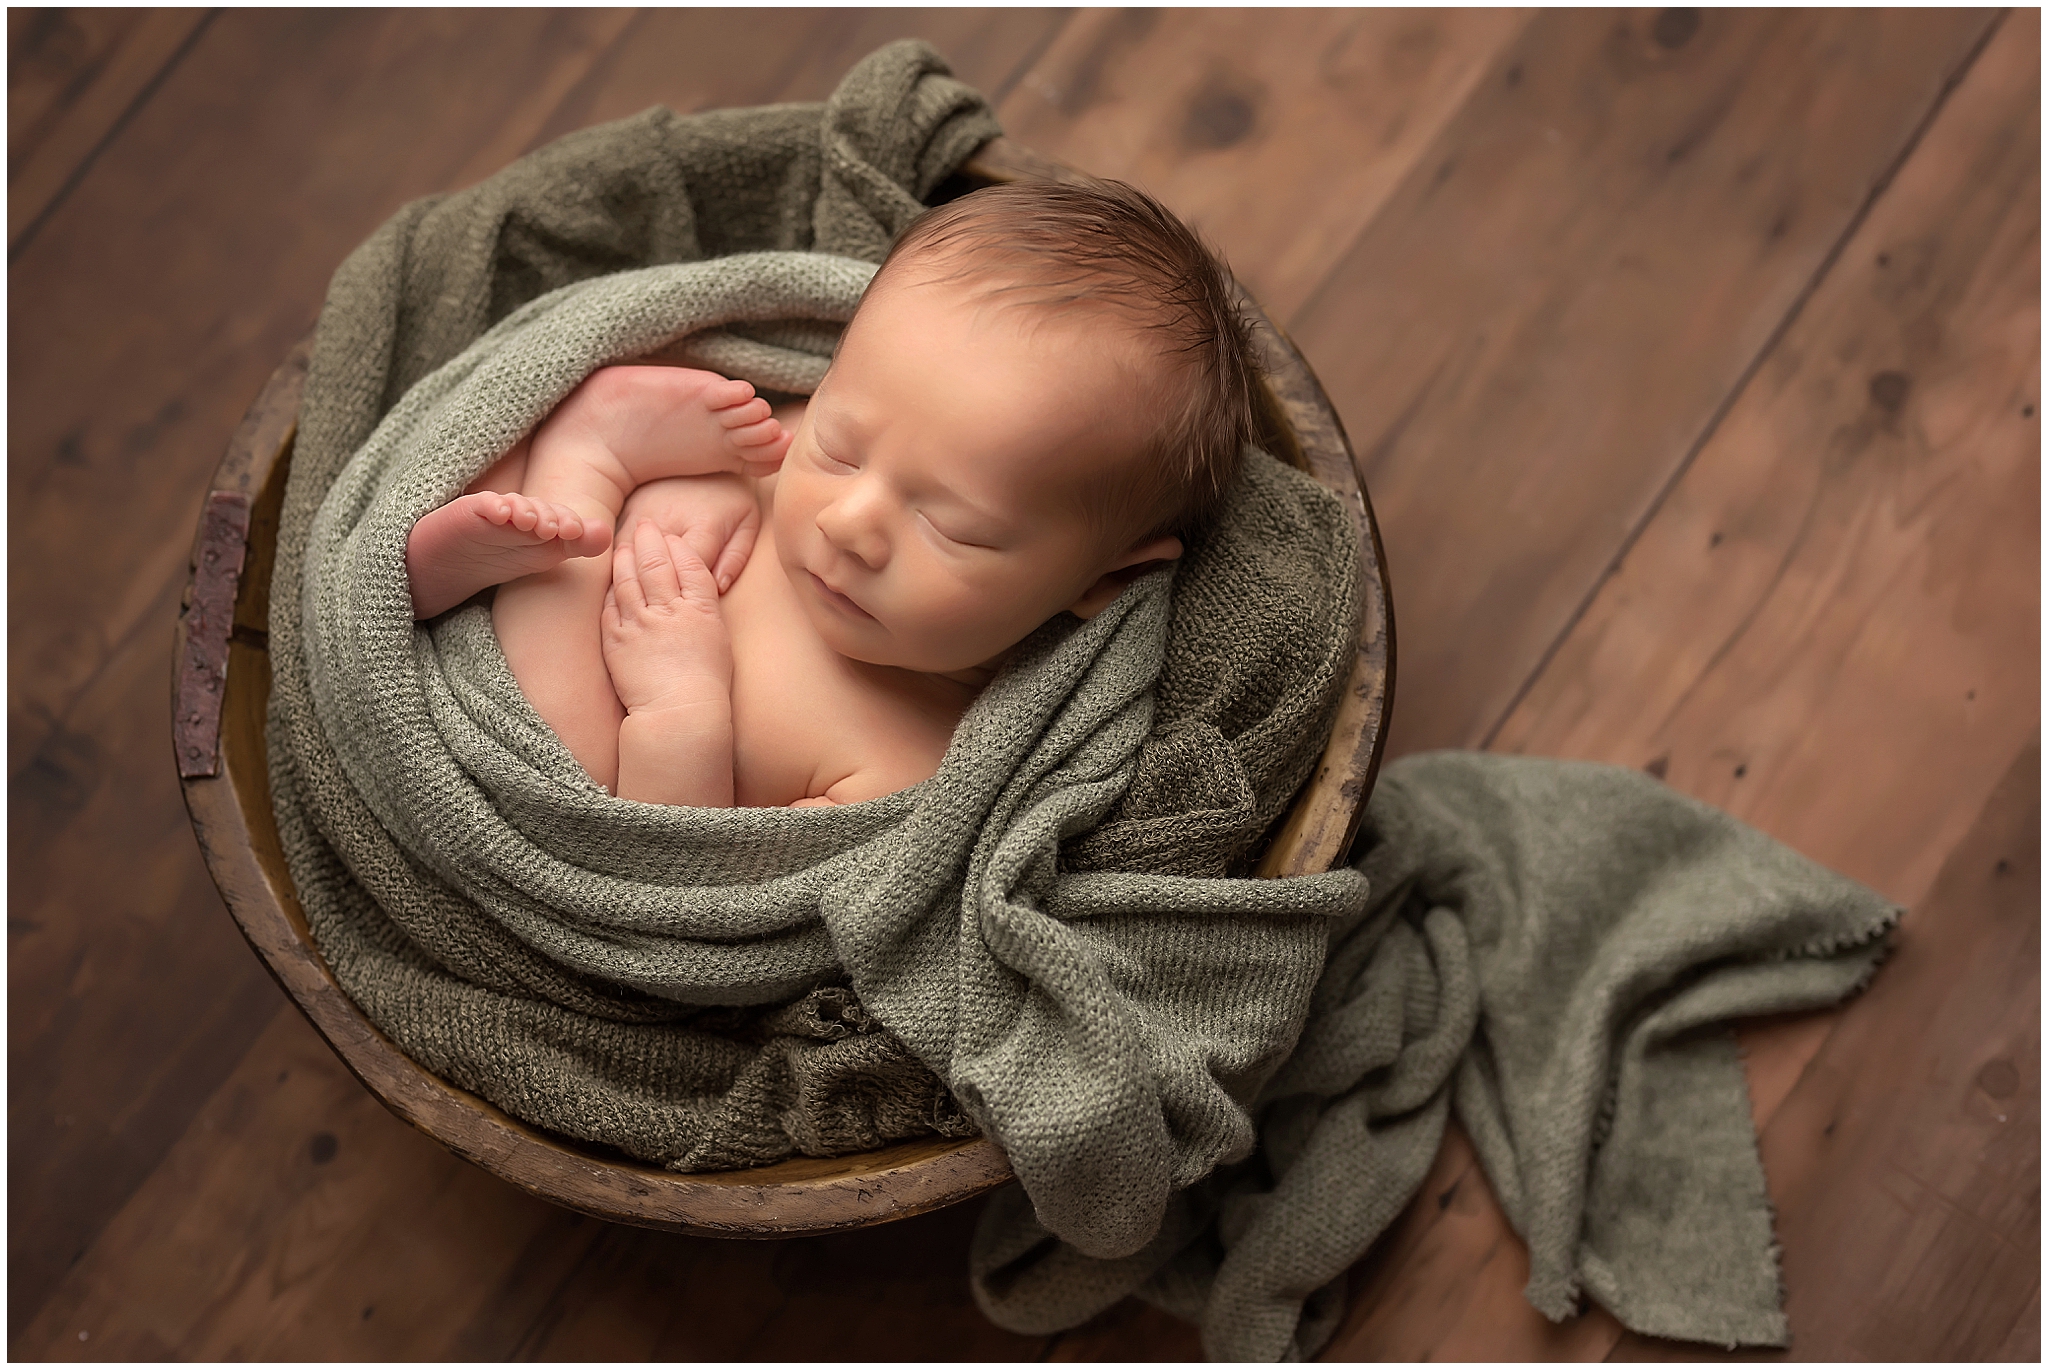 newborn baby sleeping in bowl during newborn photography session in London Ontario studio